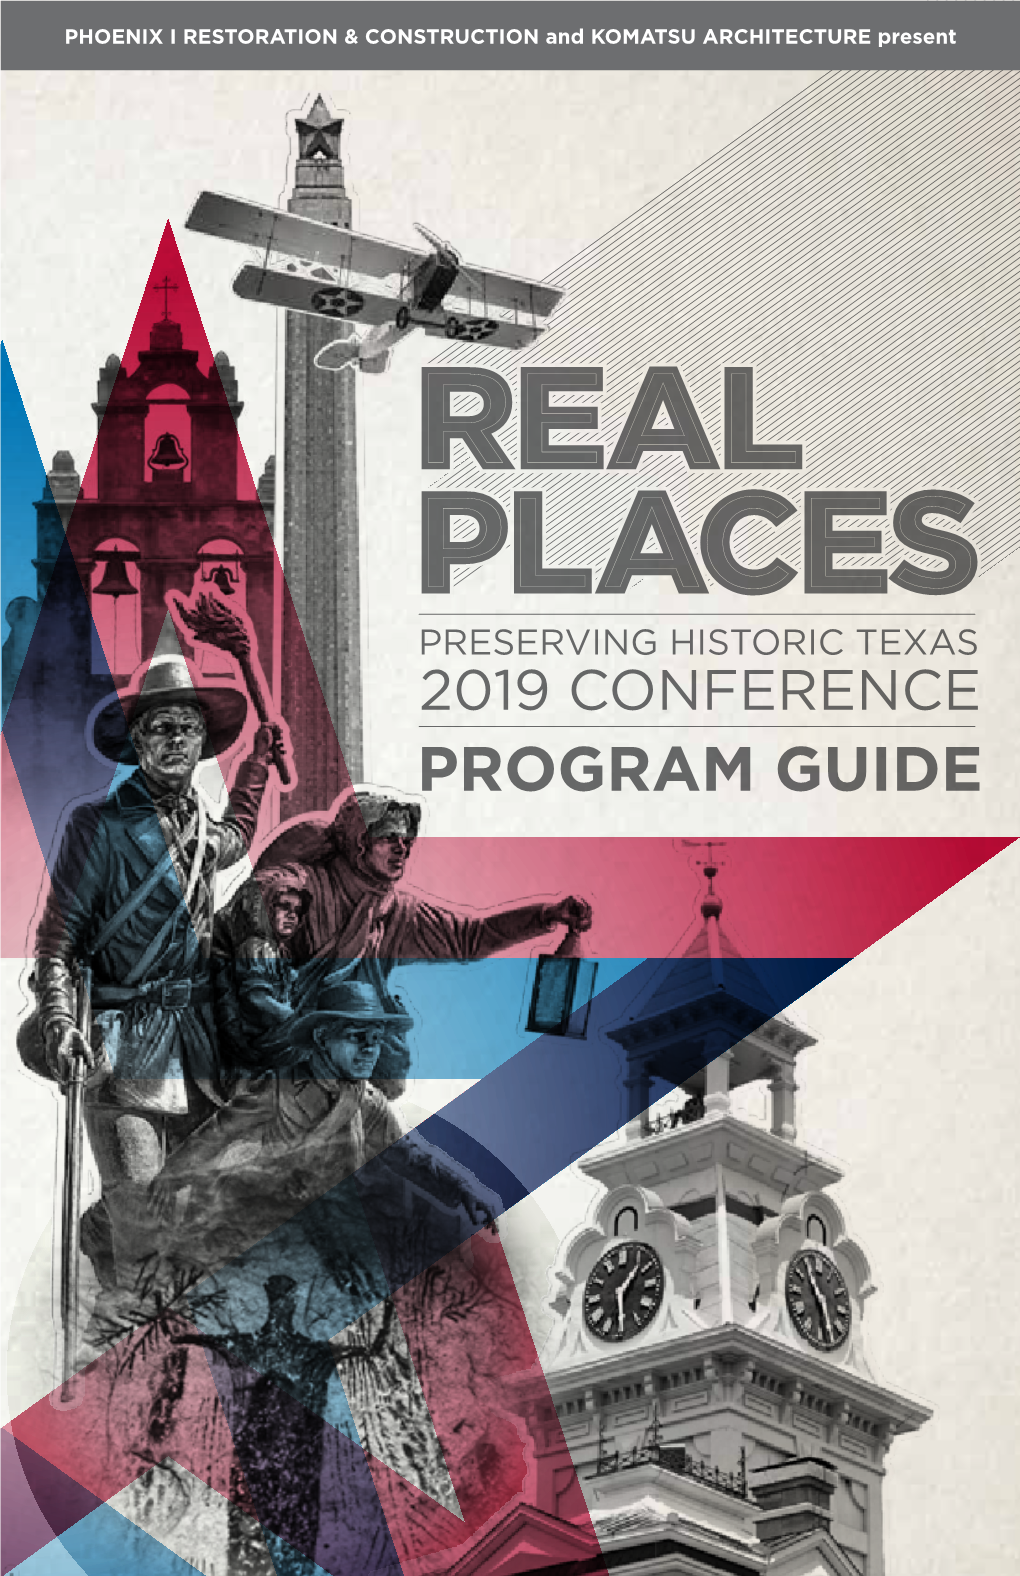 Program Guide 2019 Conference